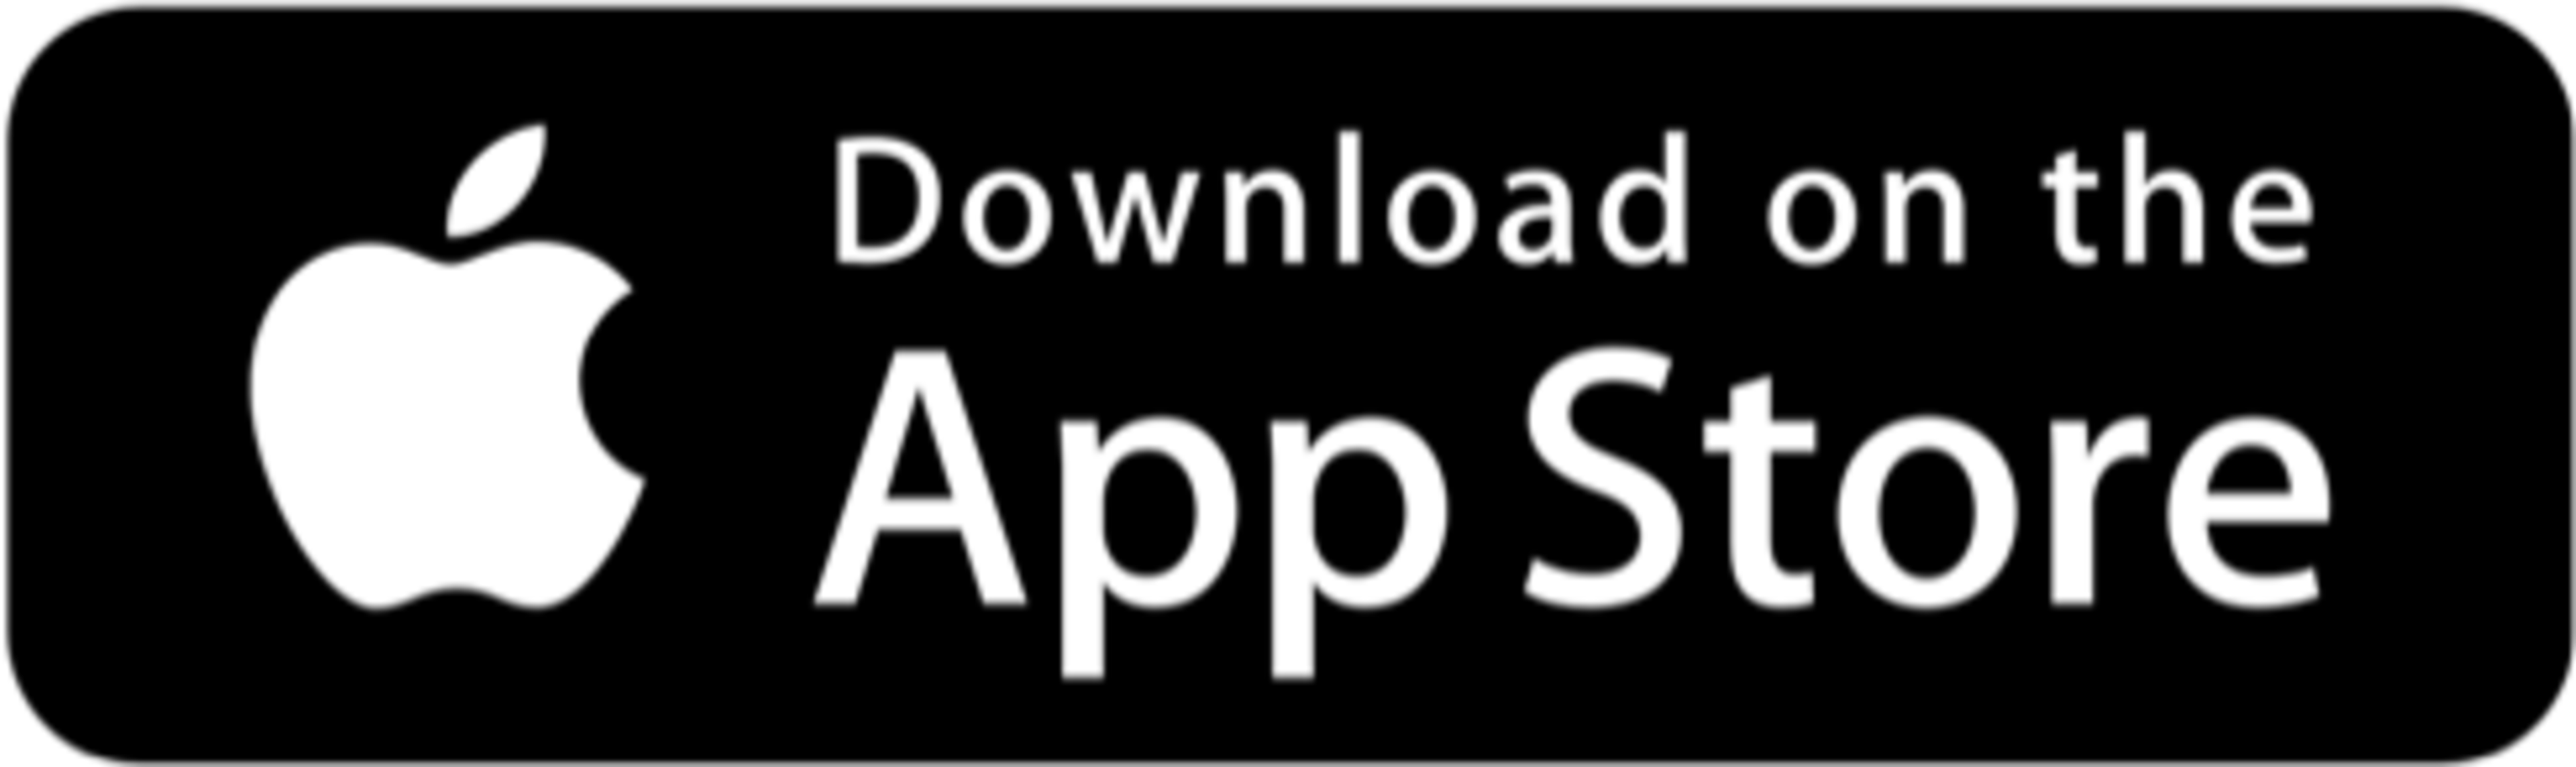 Download Disney Plus Libya App now on app store